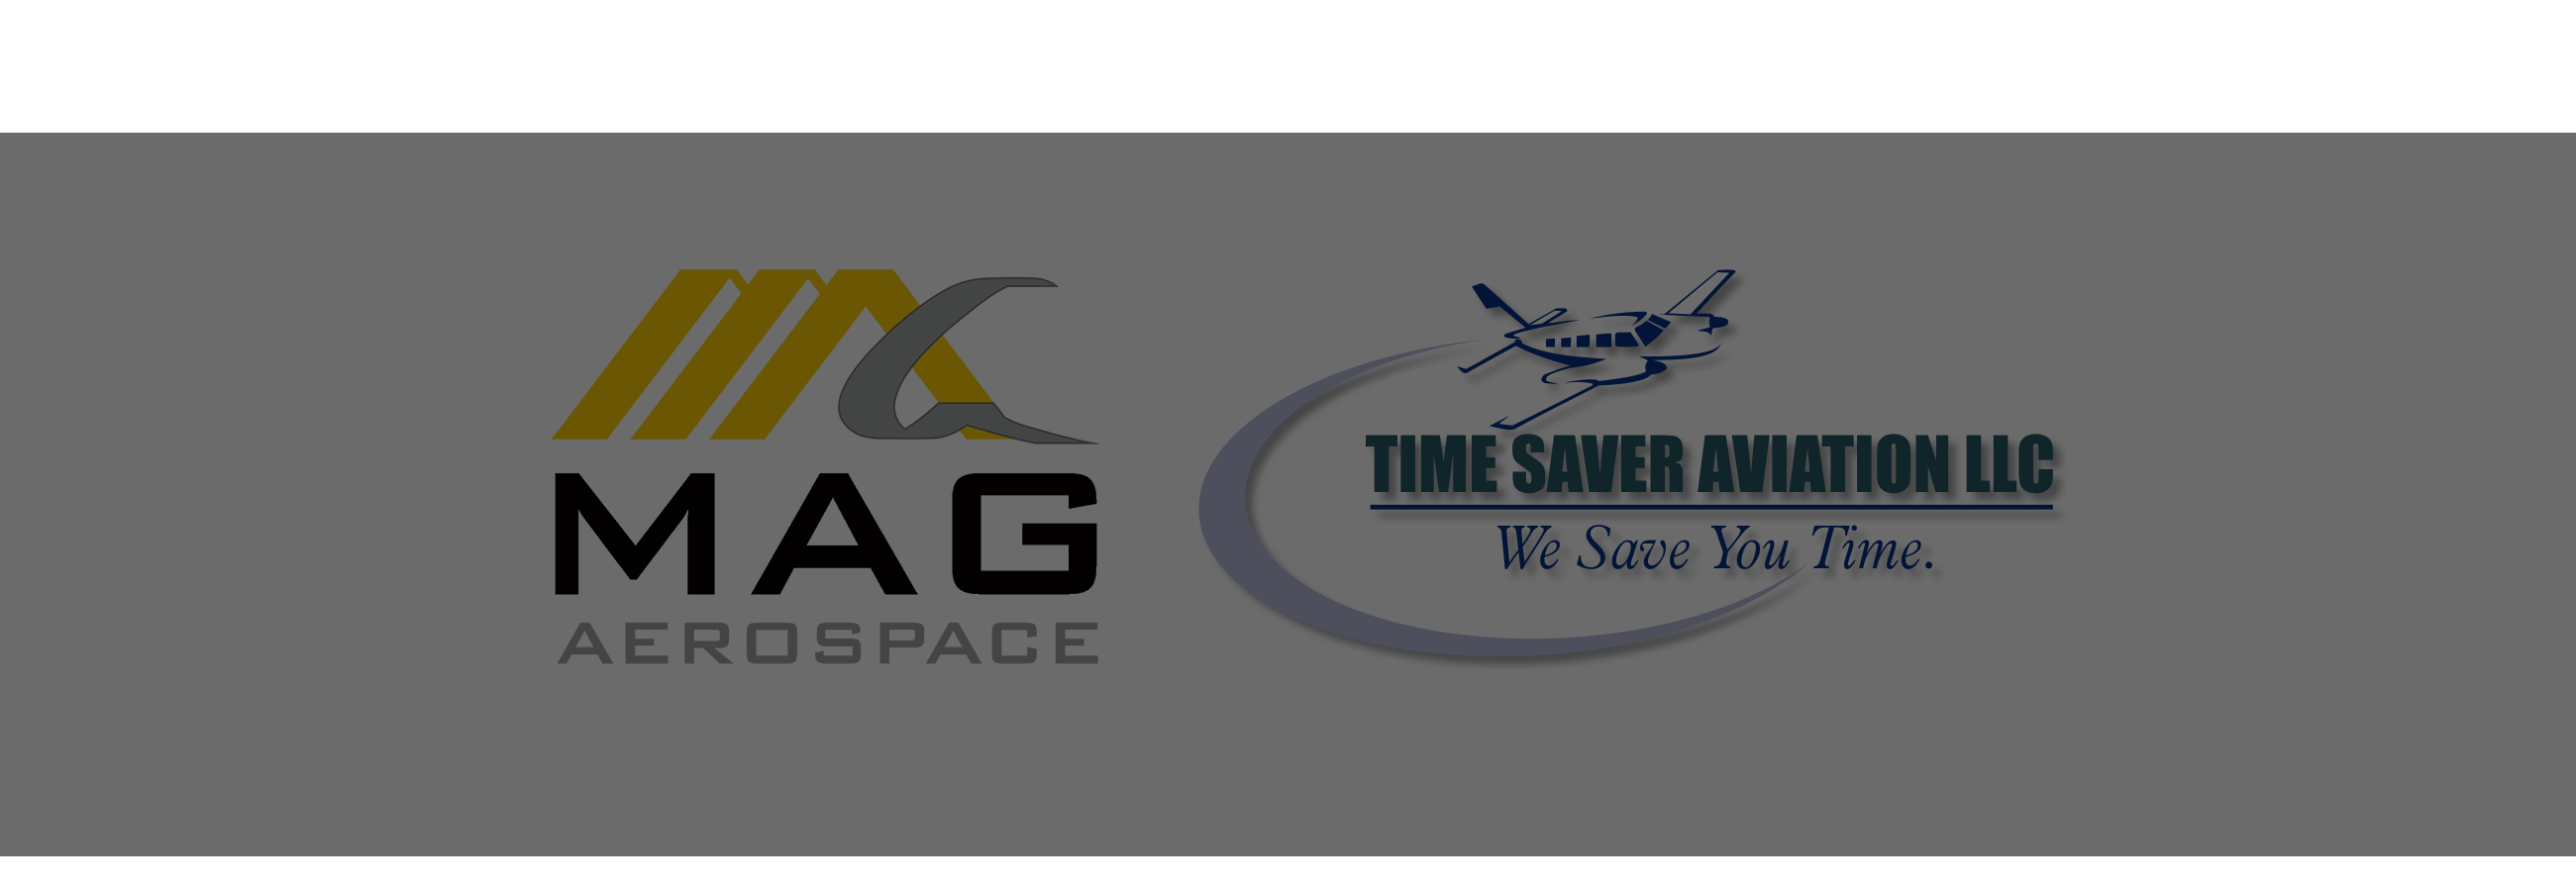 Time Saver Aviation LLC and MAG Aerospace Logos